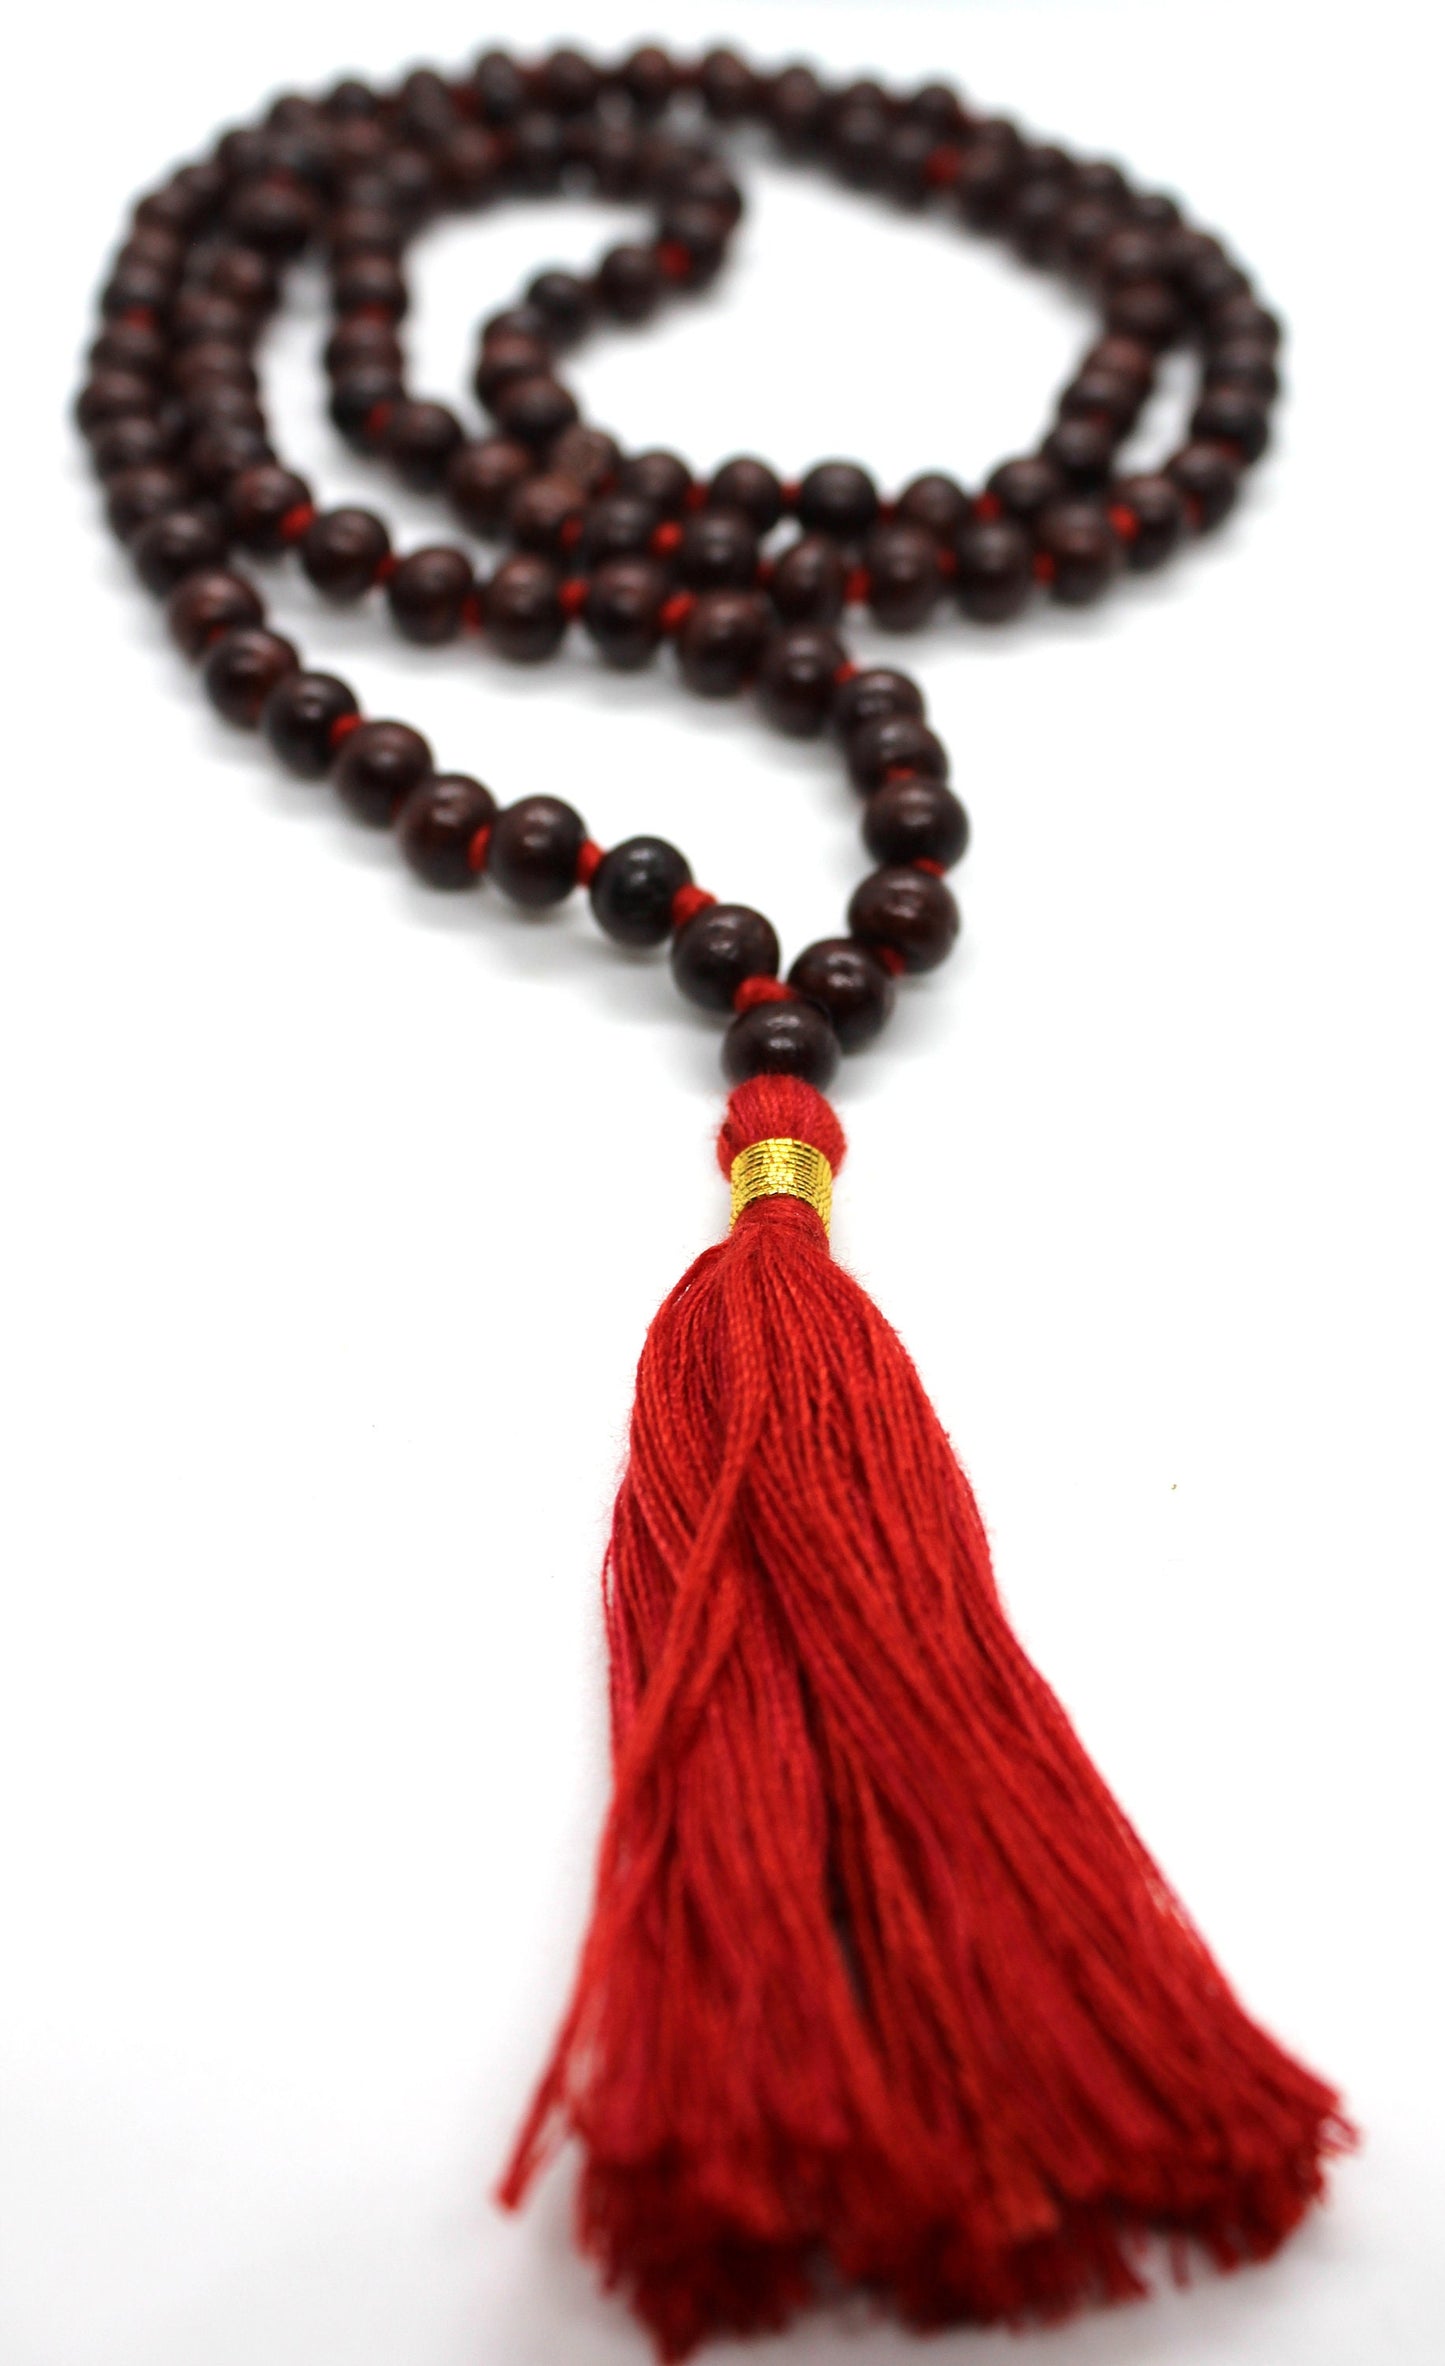 6mm Rosewood Premium Mala - Meditation Inspired Yoga Beads BOHO jewelry/necklace /mala beads - Rosewood Necklace 108-Meditation Necklace